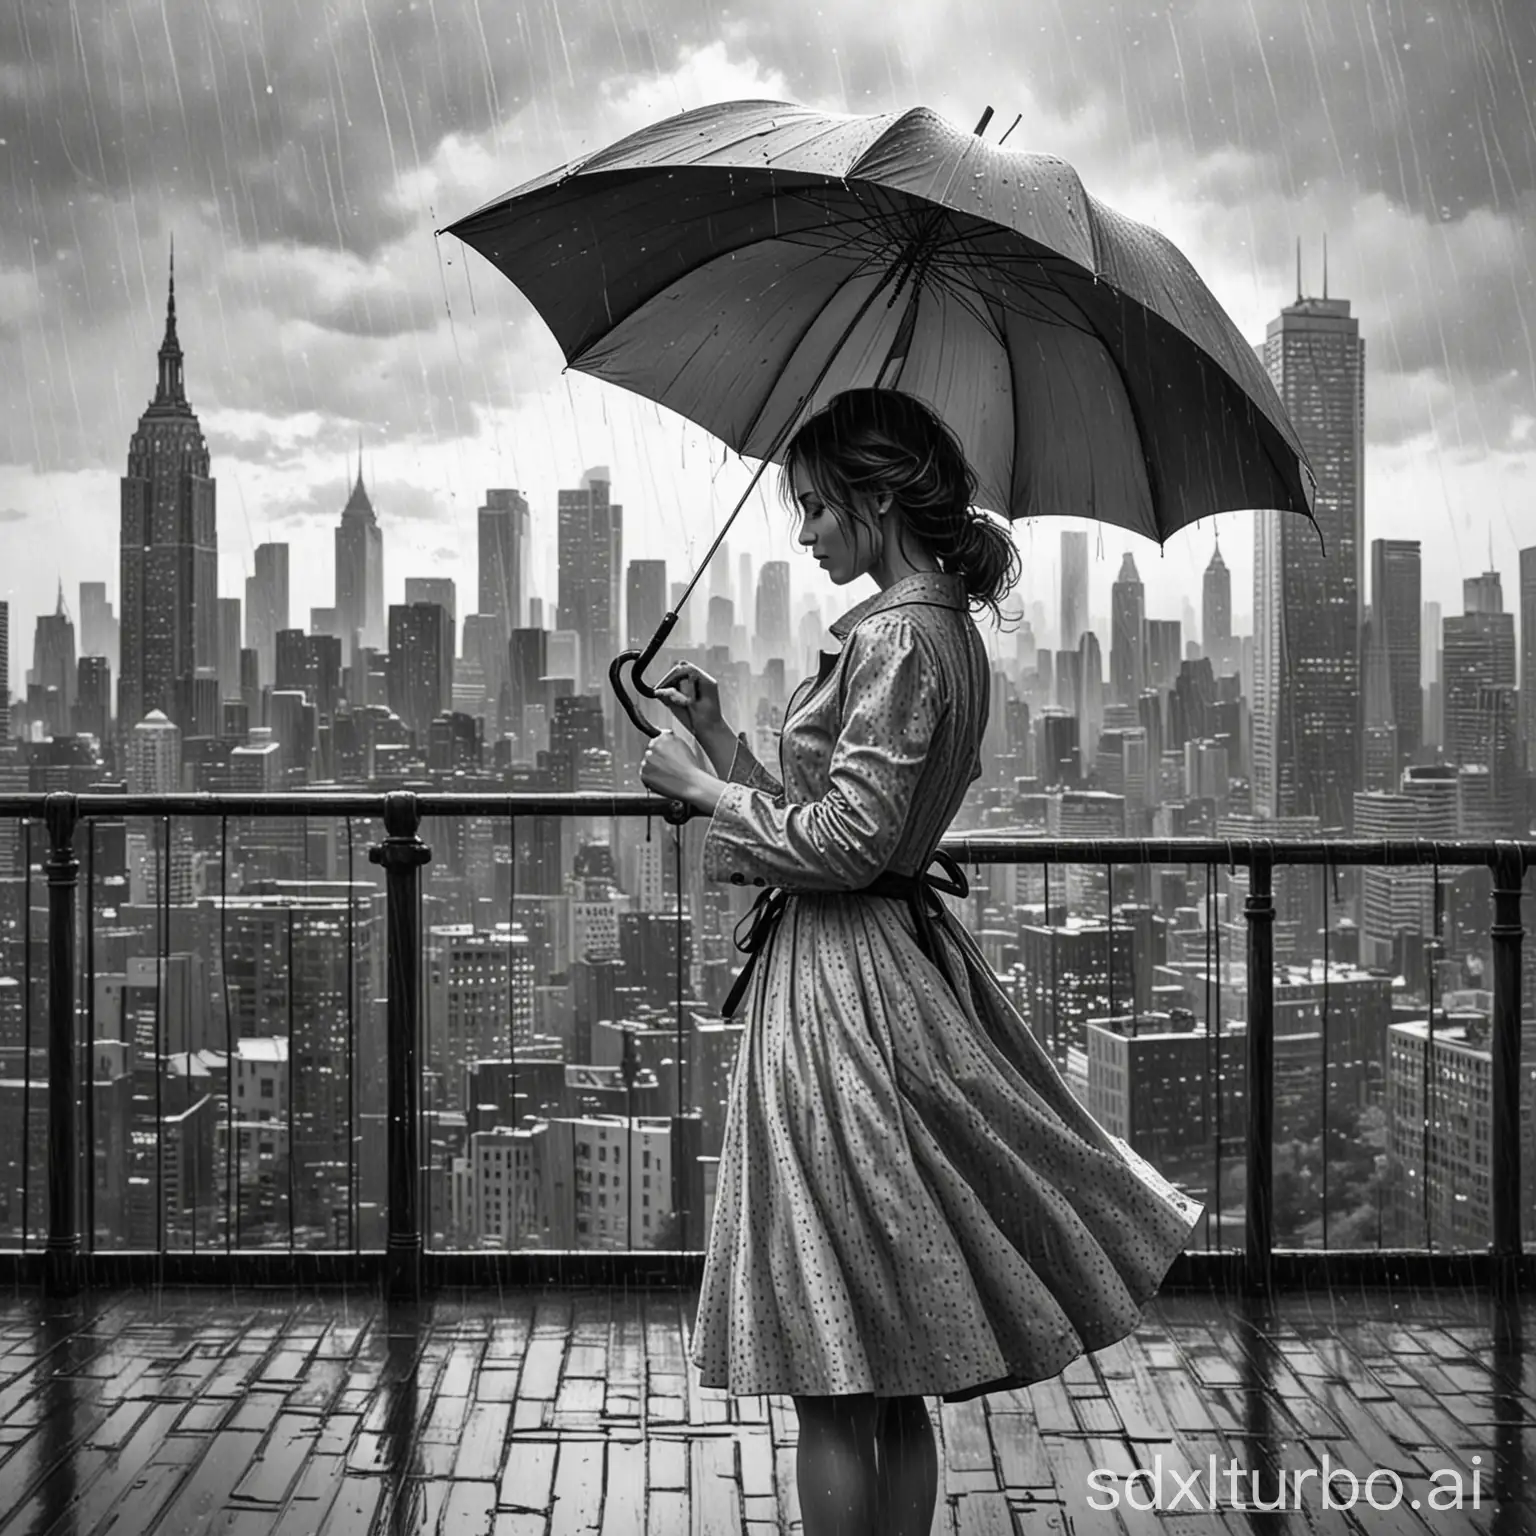 Urban-Rainy-Day-Woman-in-Dress-with-Umbrella-Sketch